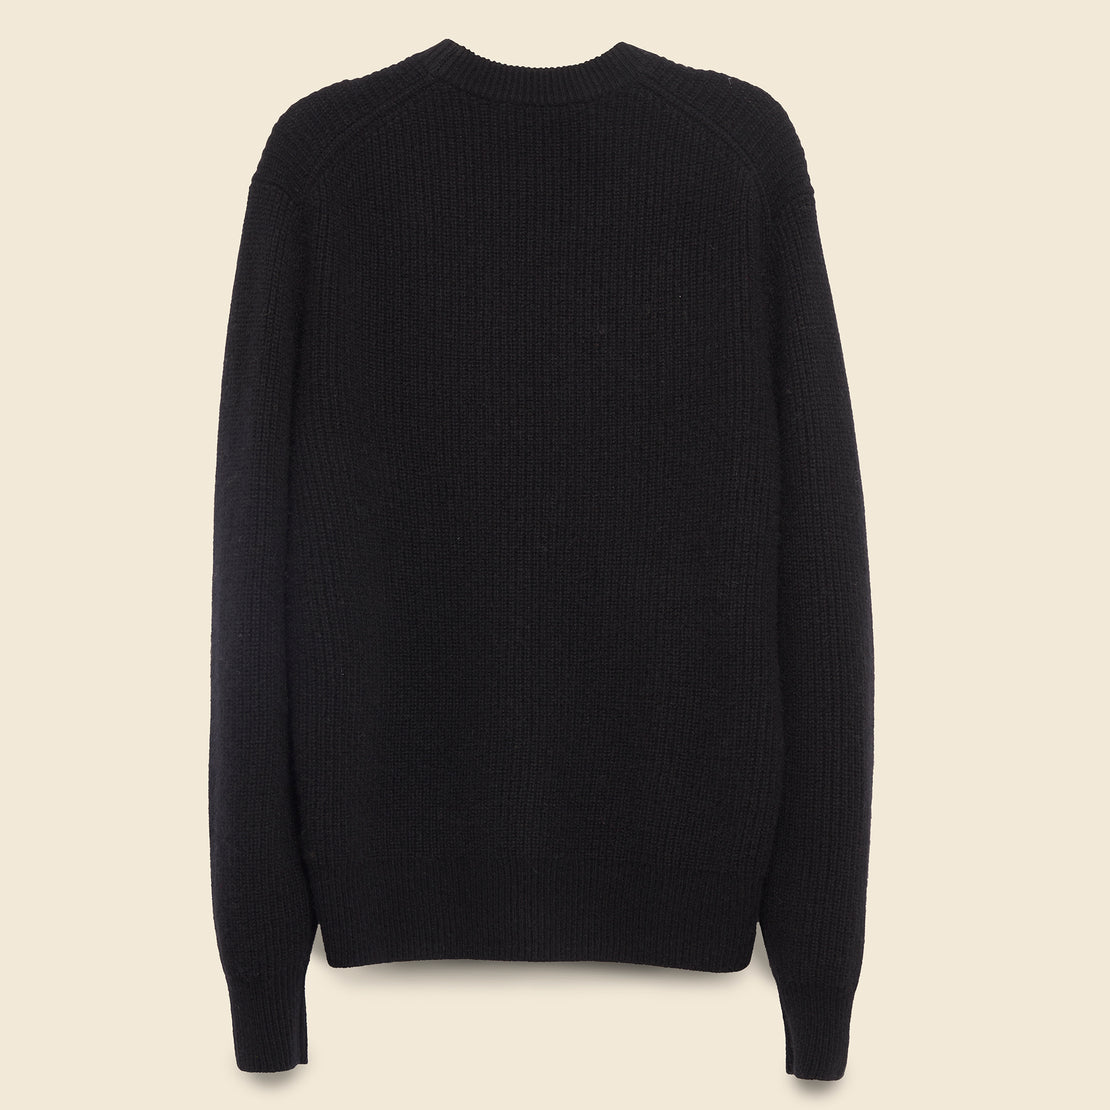 Cashmere Jordan Sweater - Black - Alex Mill - STAG Provisions - W - Tops - Sweater